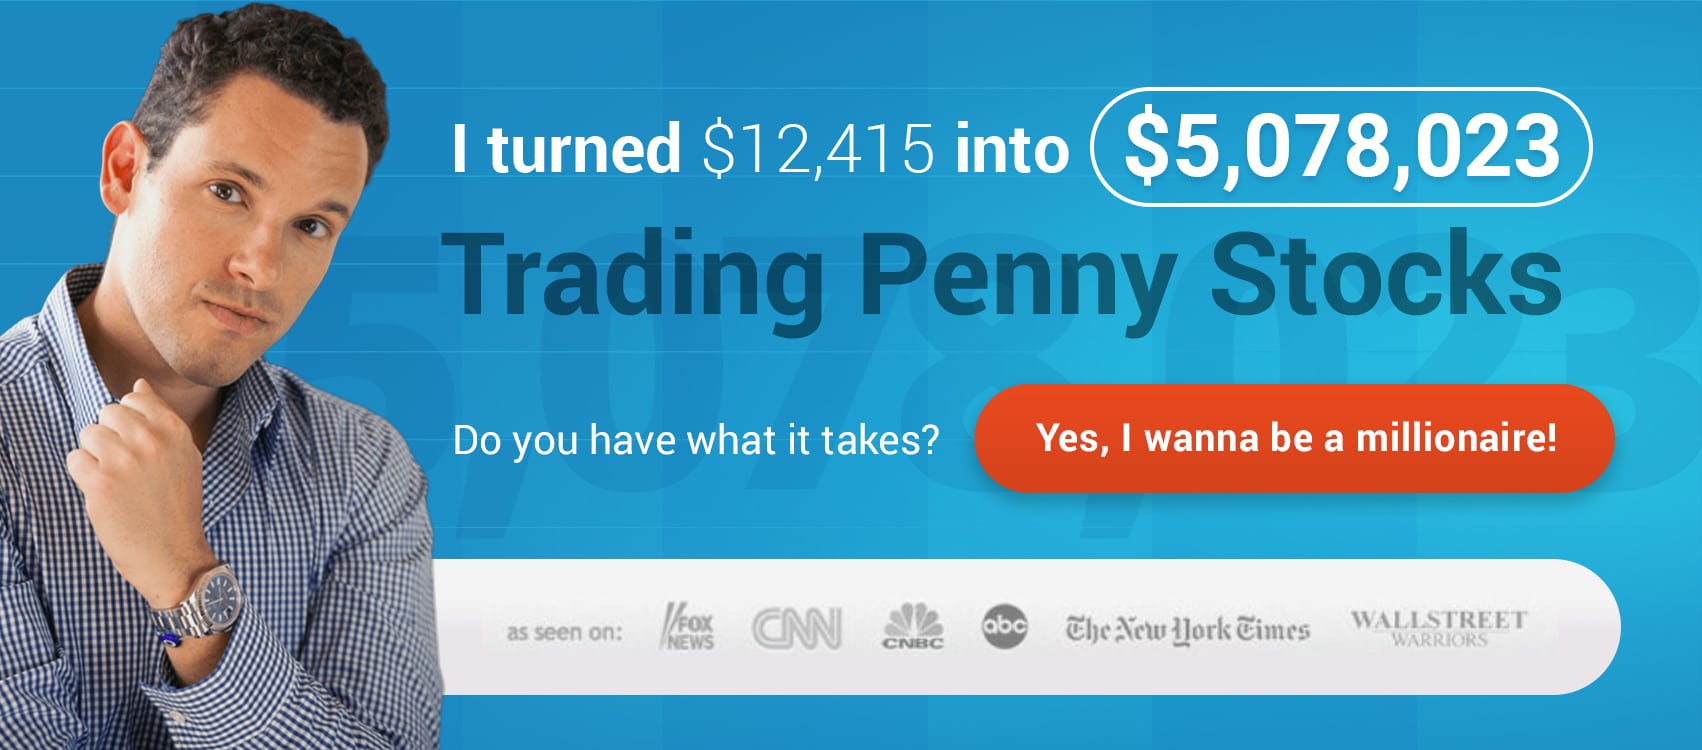 Tim's Penny Stocks Millionaire Challenge